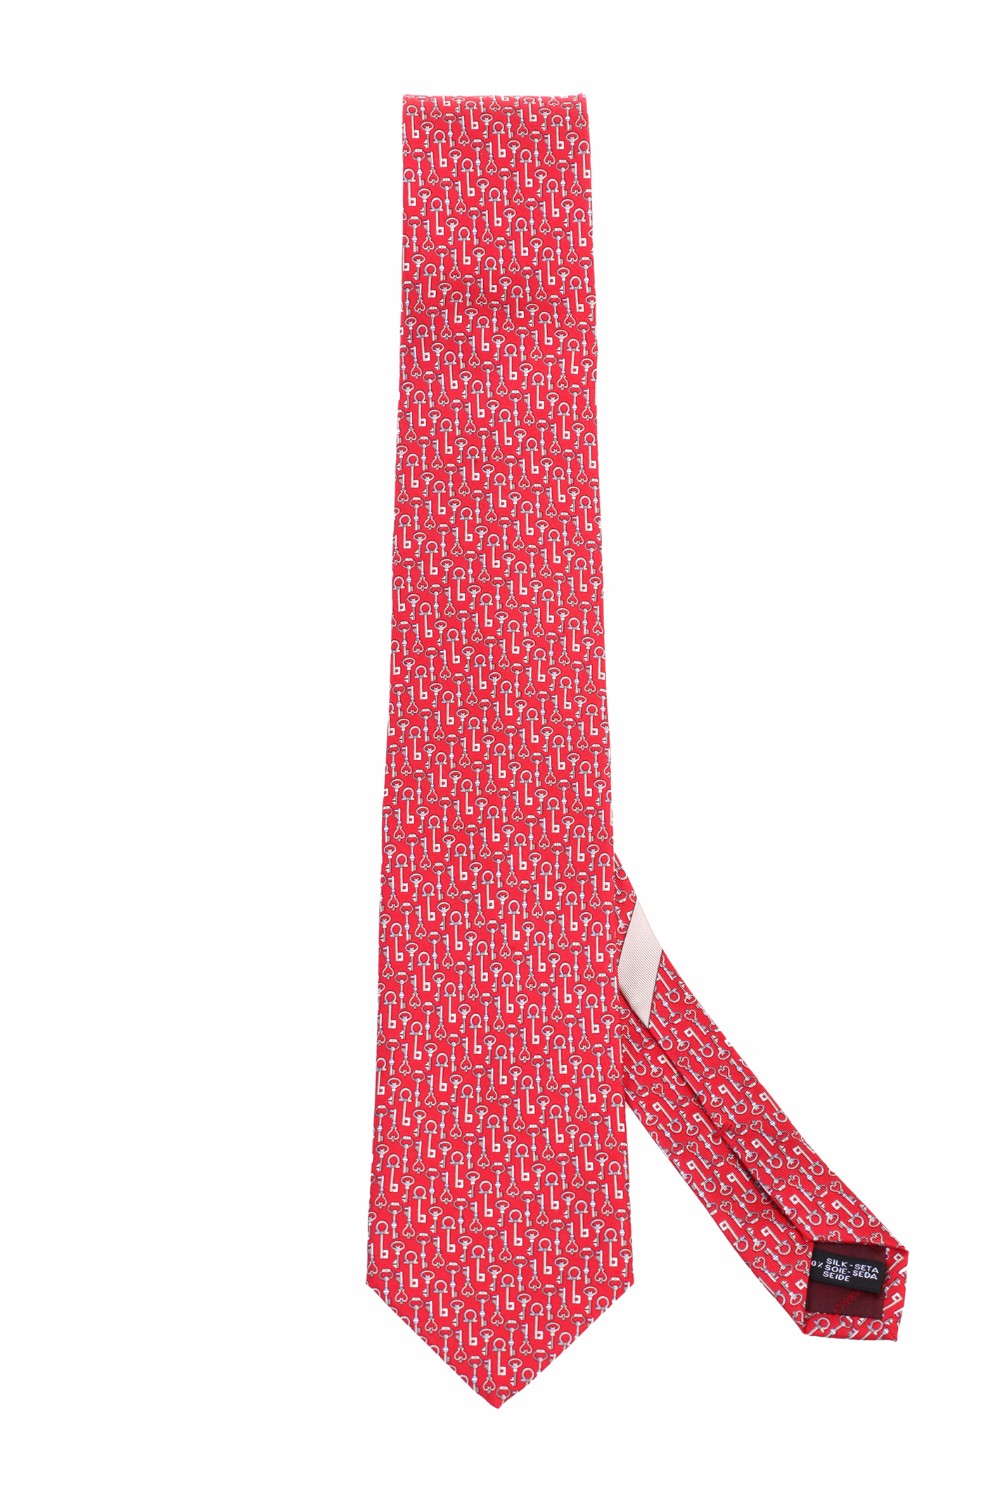 shop SALVATORE FERRAGAMO  Cravatta: Salvatore Ferragamo cravatta in seta stampa Chiavi.
Composizione: 100% seta.
Made in Italy.. 350292-R number 9050983